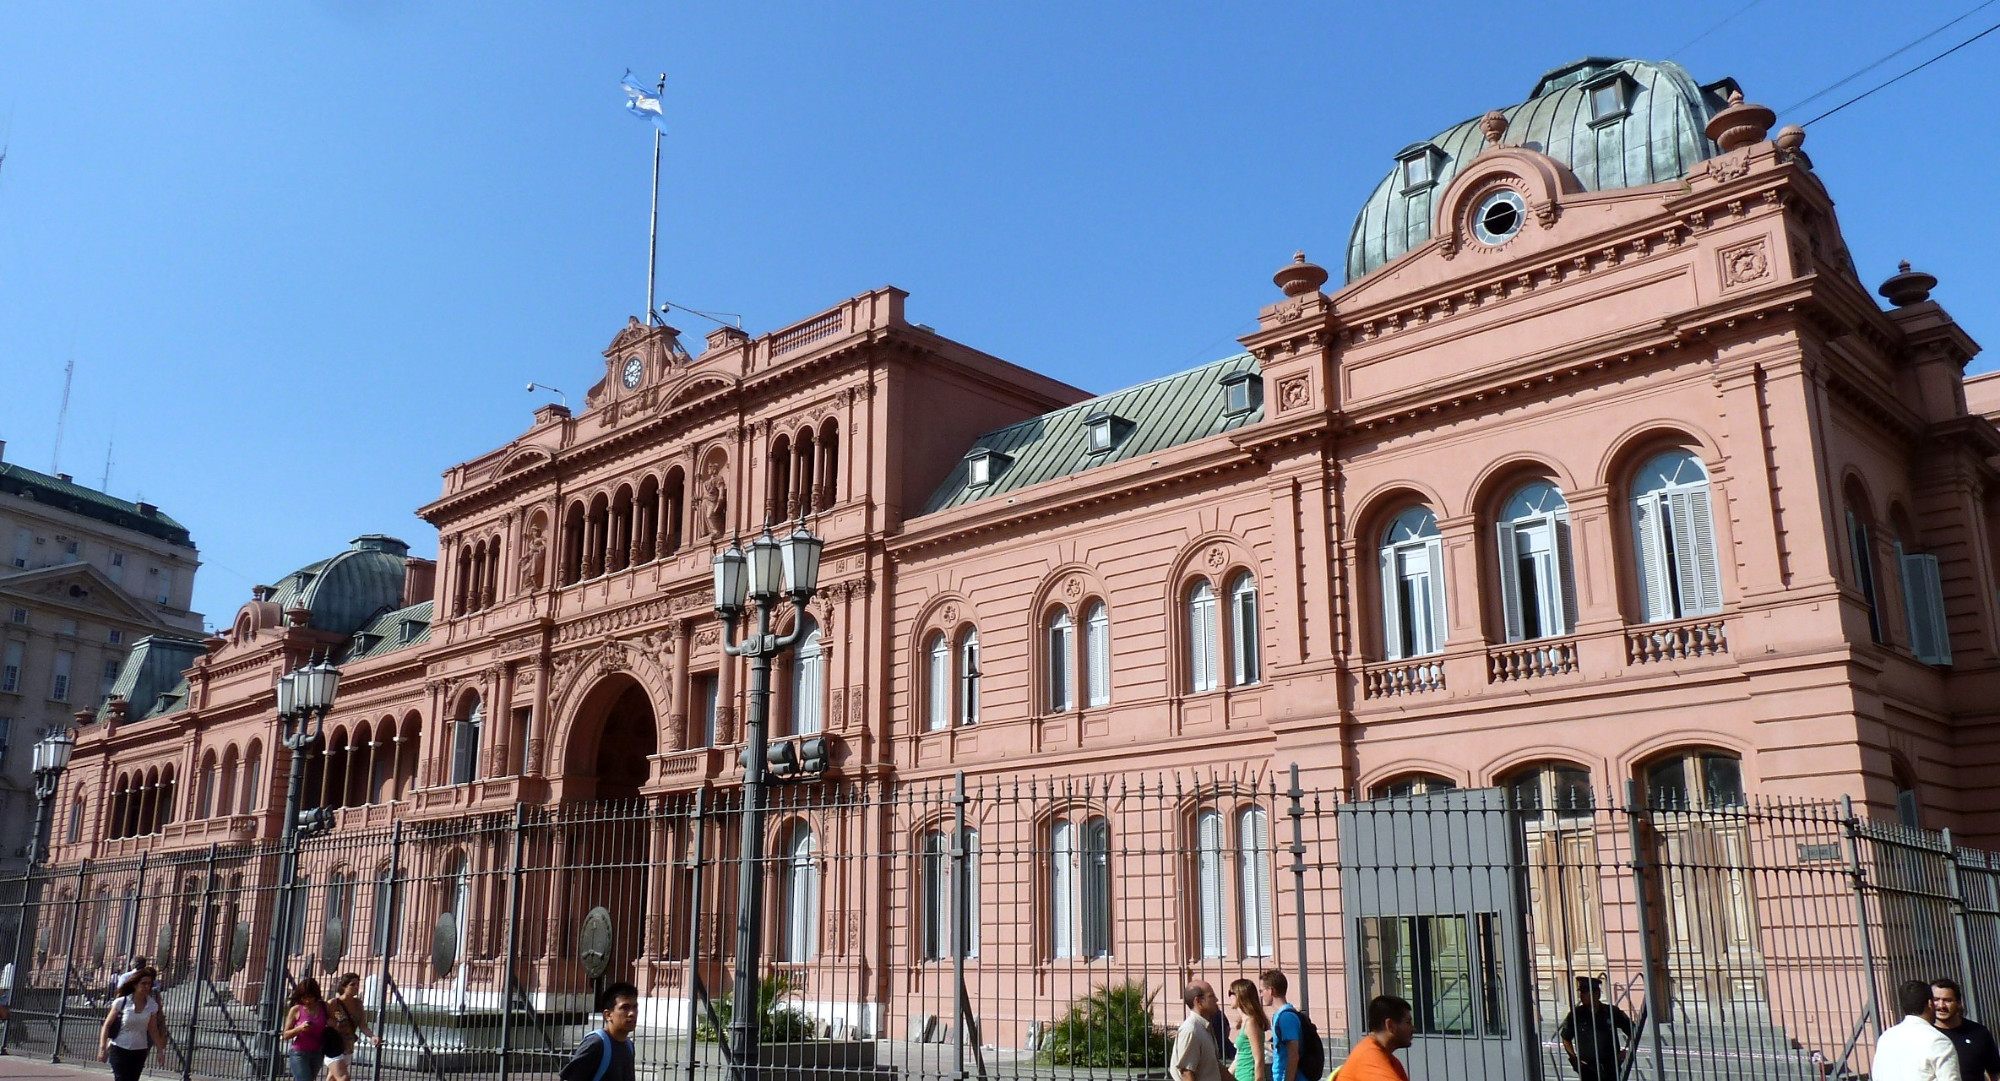 Casa Rosada<br/>
Federal government office<br/>
